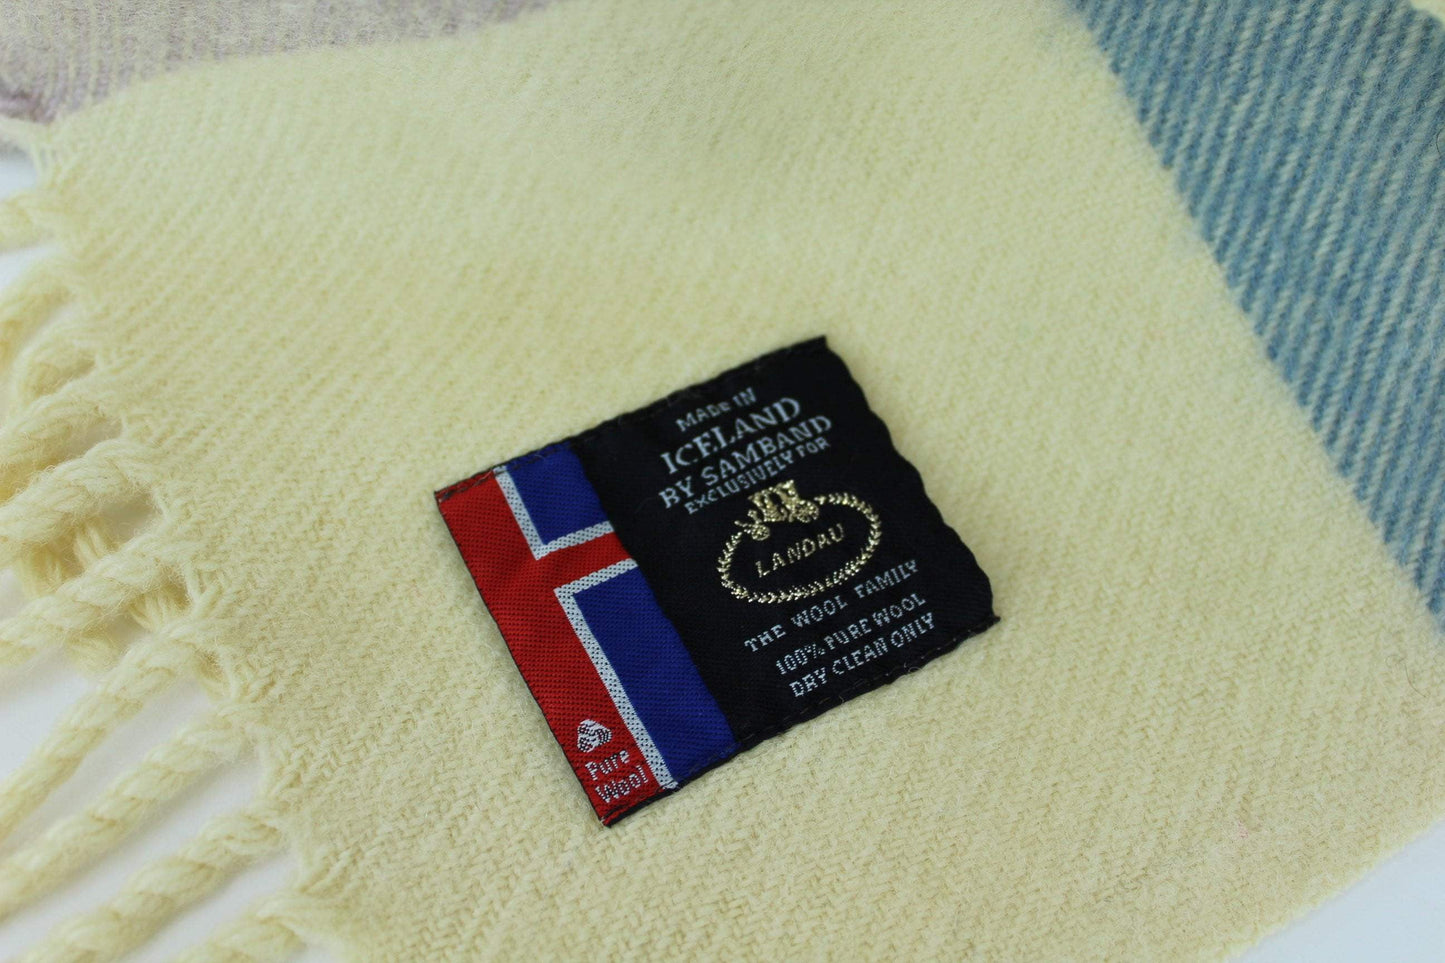 Samband for Adrienne Landau Wool Blanket - Ivory Bands of Blue Lavender original tag